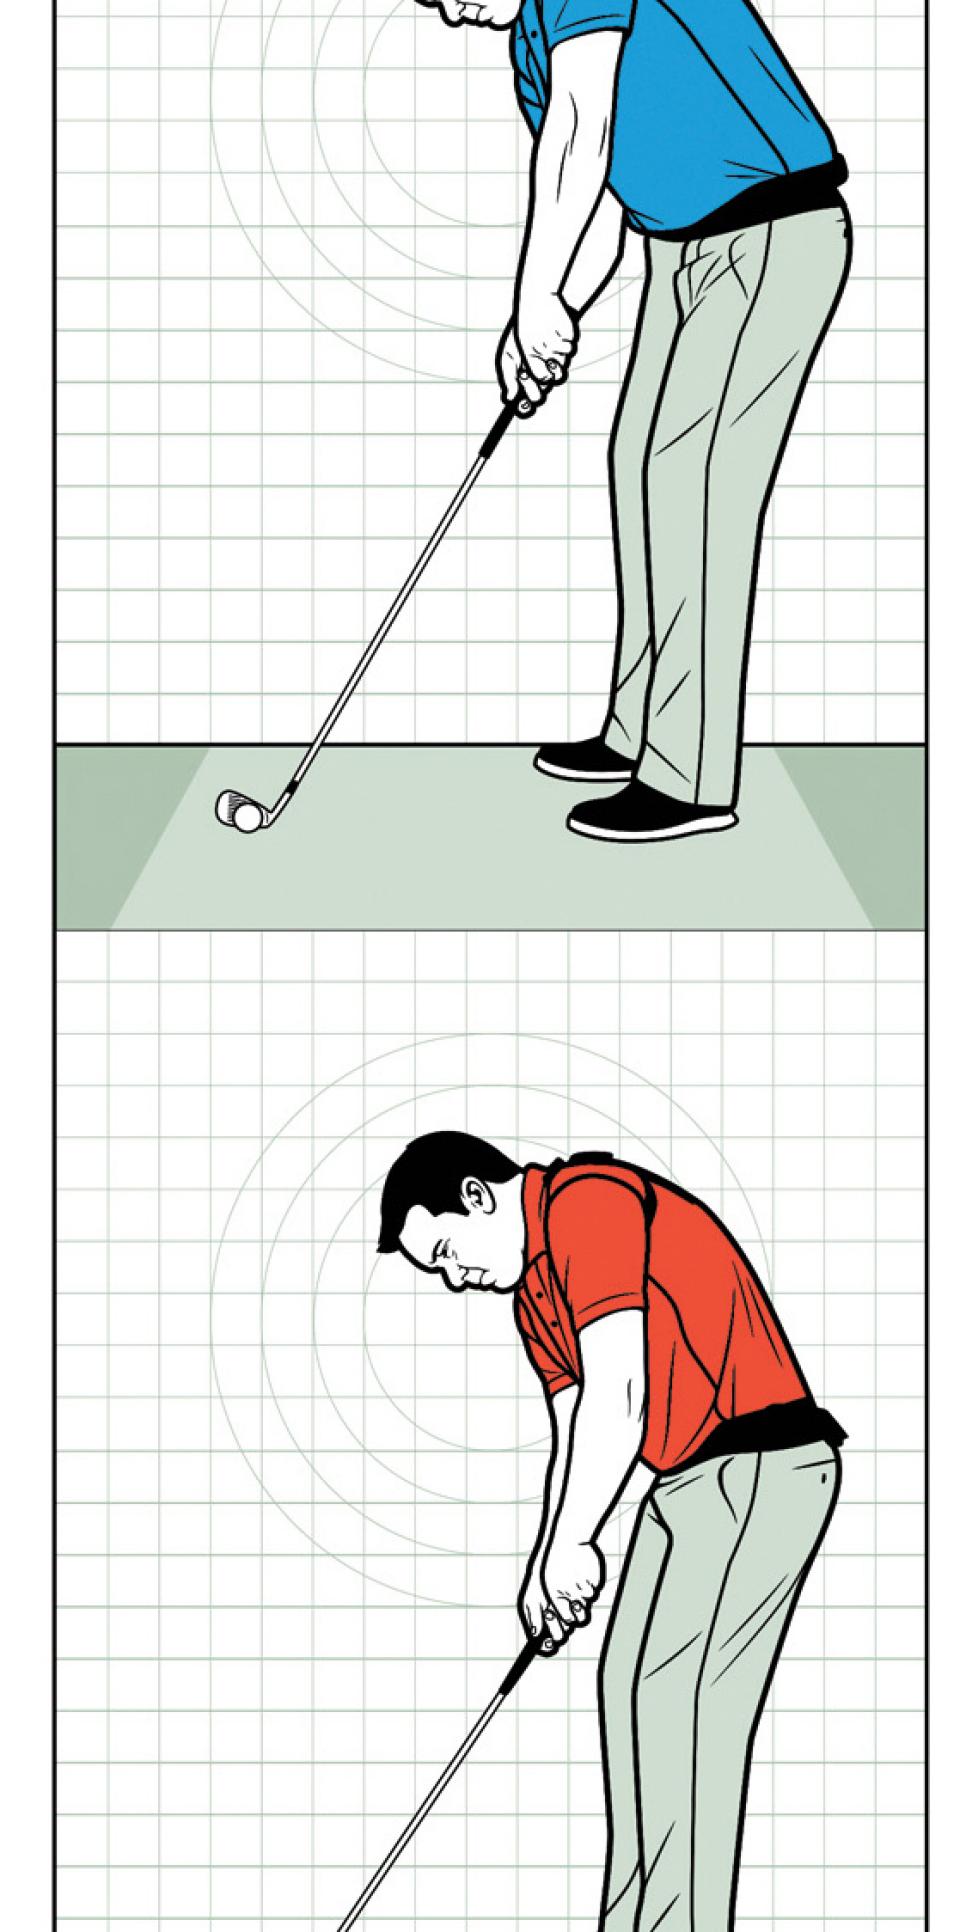 GolfTec-swing-study-illo-hip-turn-at-impact.jpg